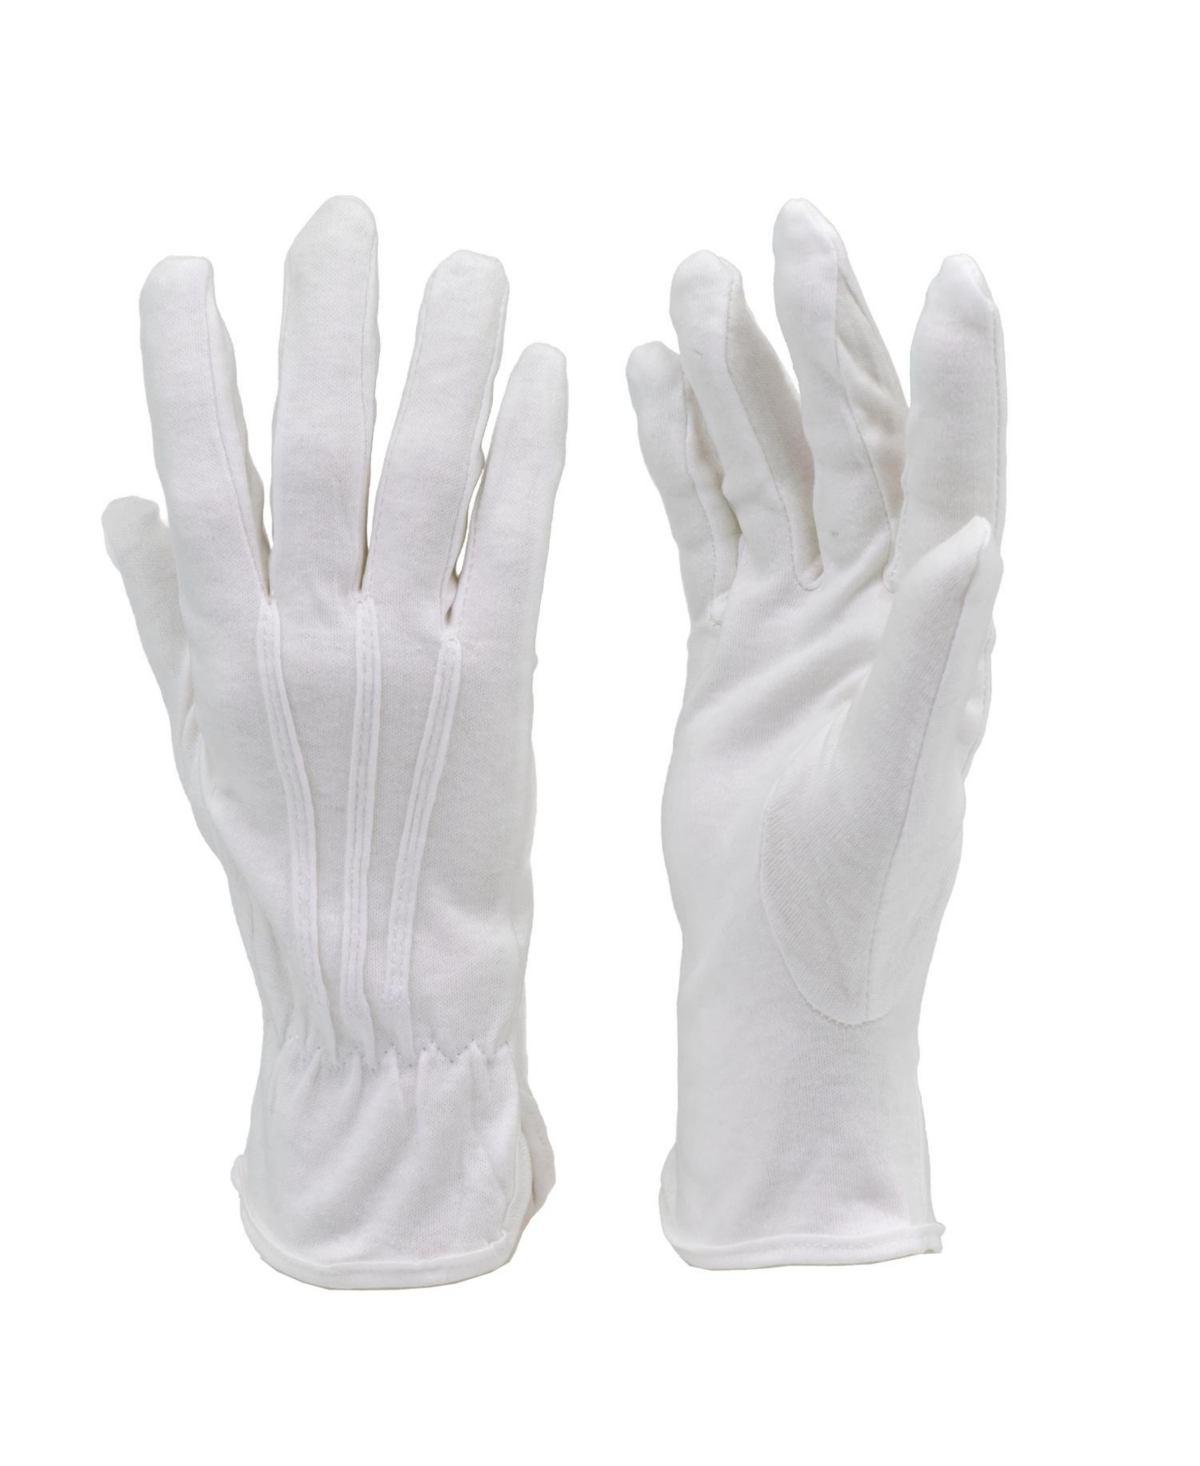 Premium White Cotton Marching Band Parade Formal dress gloves - White